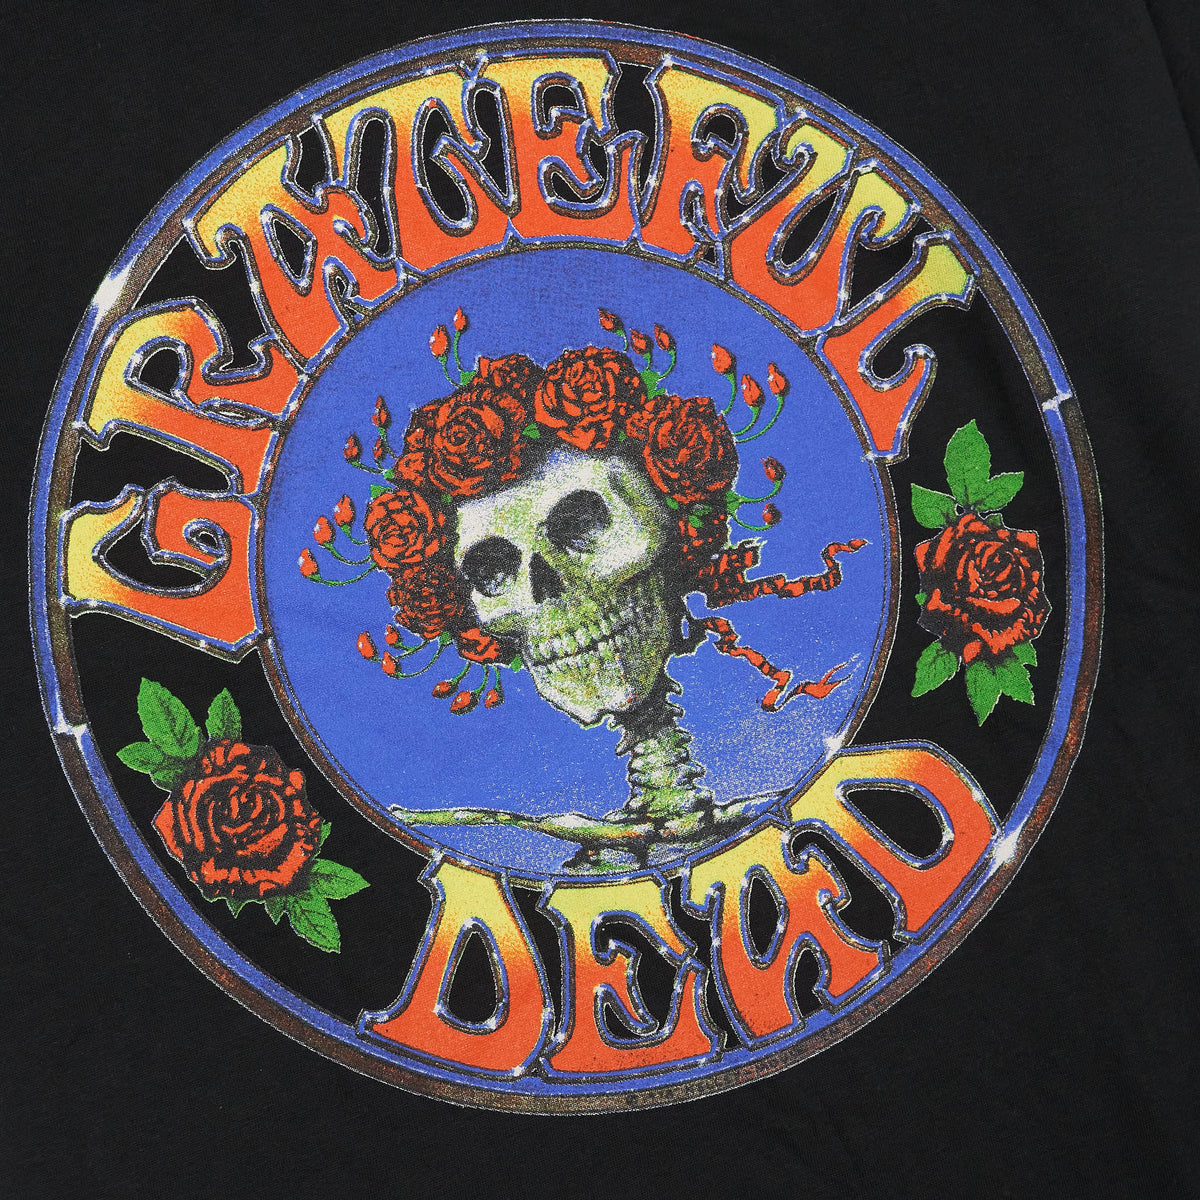 Grateful Dead Crew Neck Rock T-Shirt